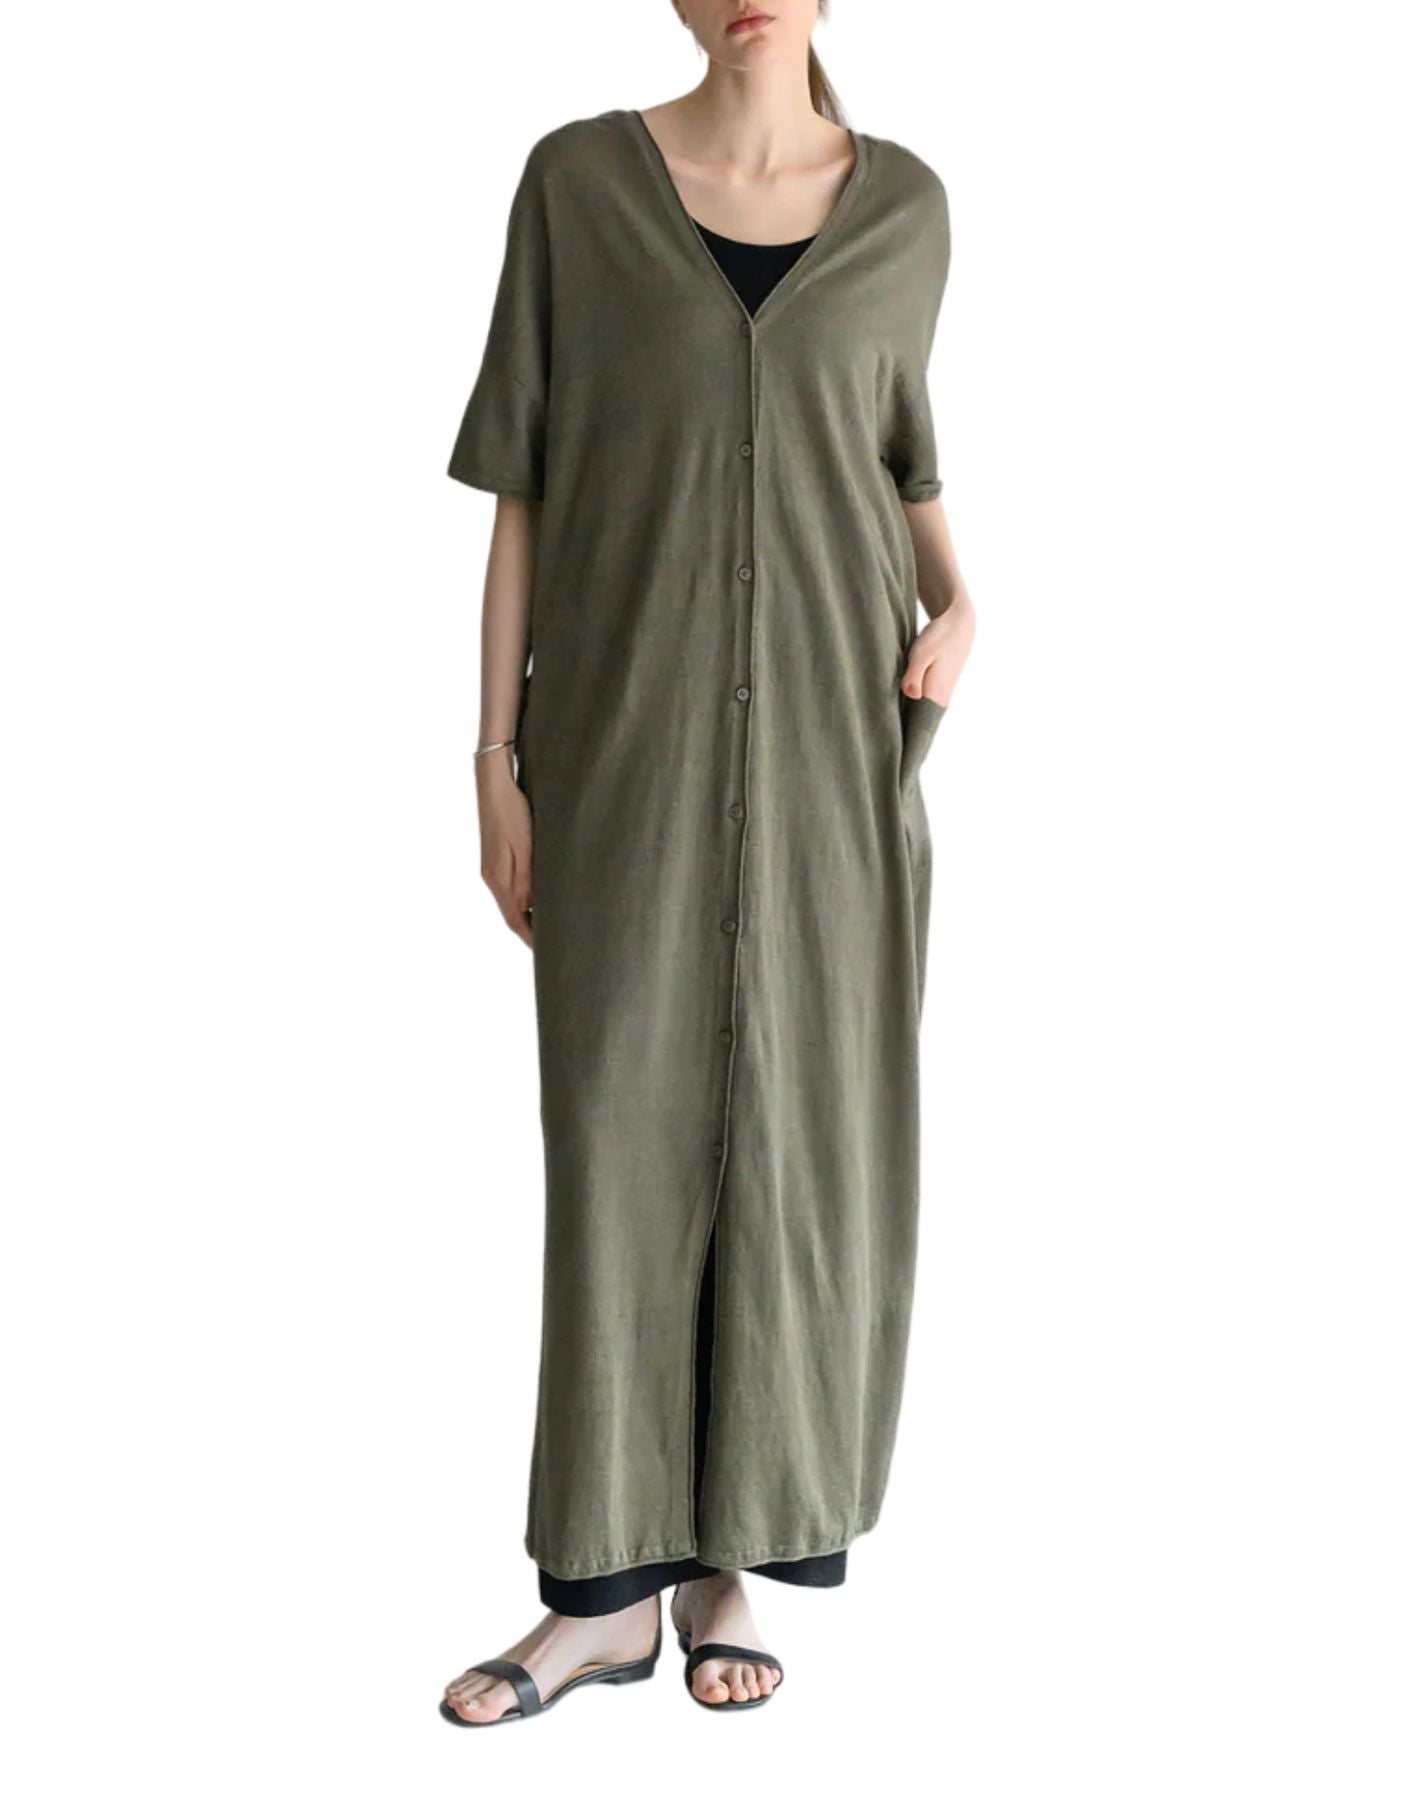 Vestido para mujer CT24135 C.T. placentero